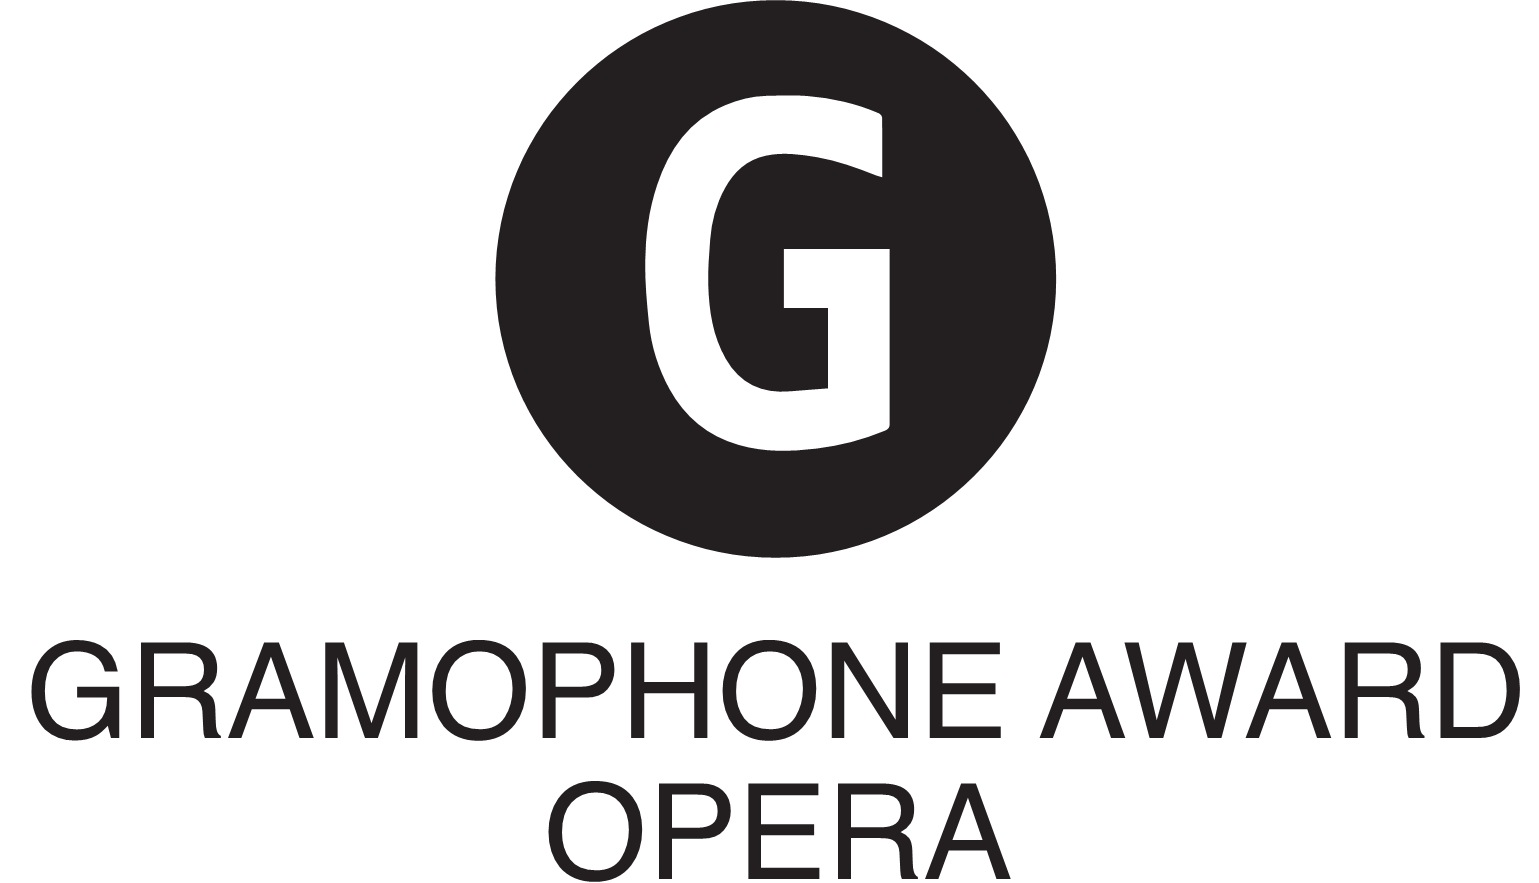 Gramophone Award: 'Opera' (2013)